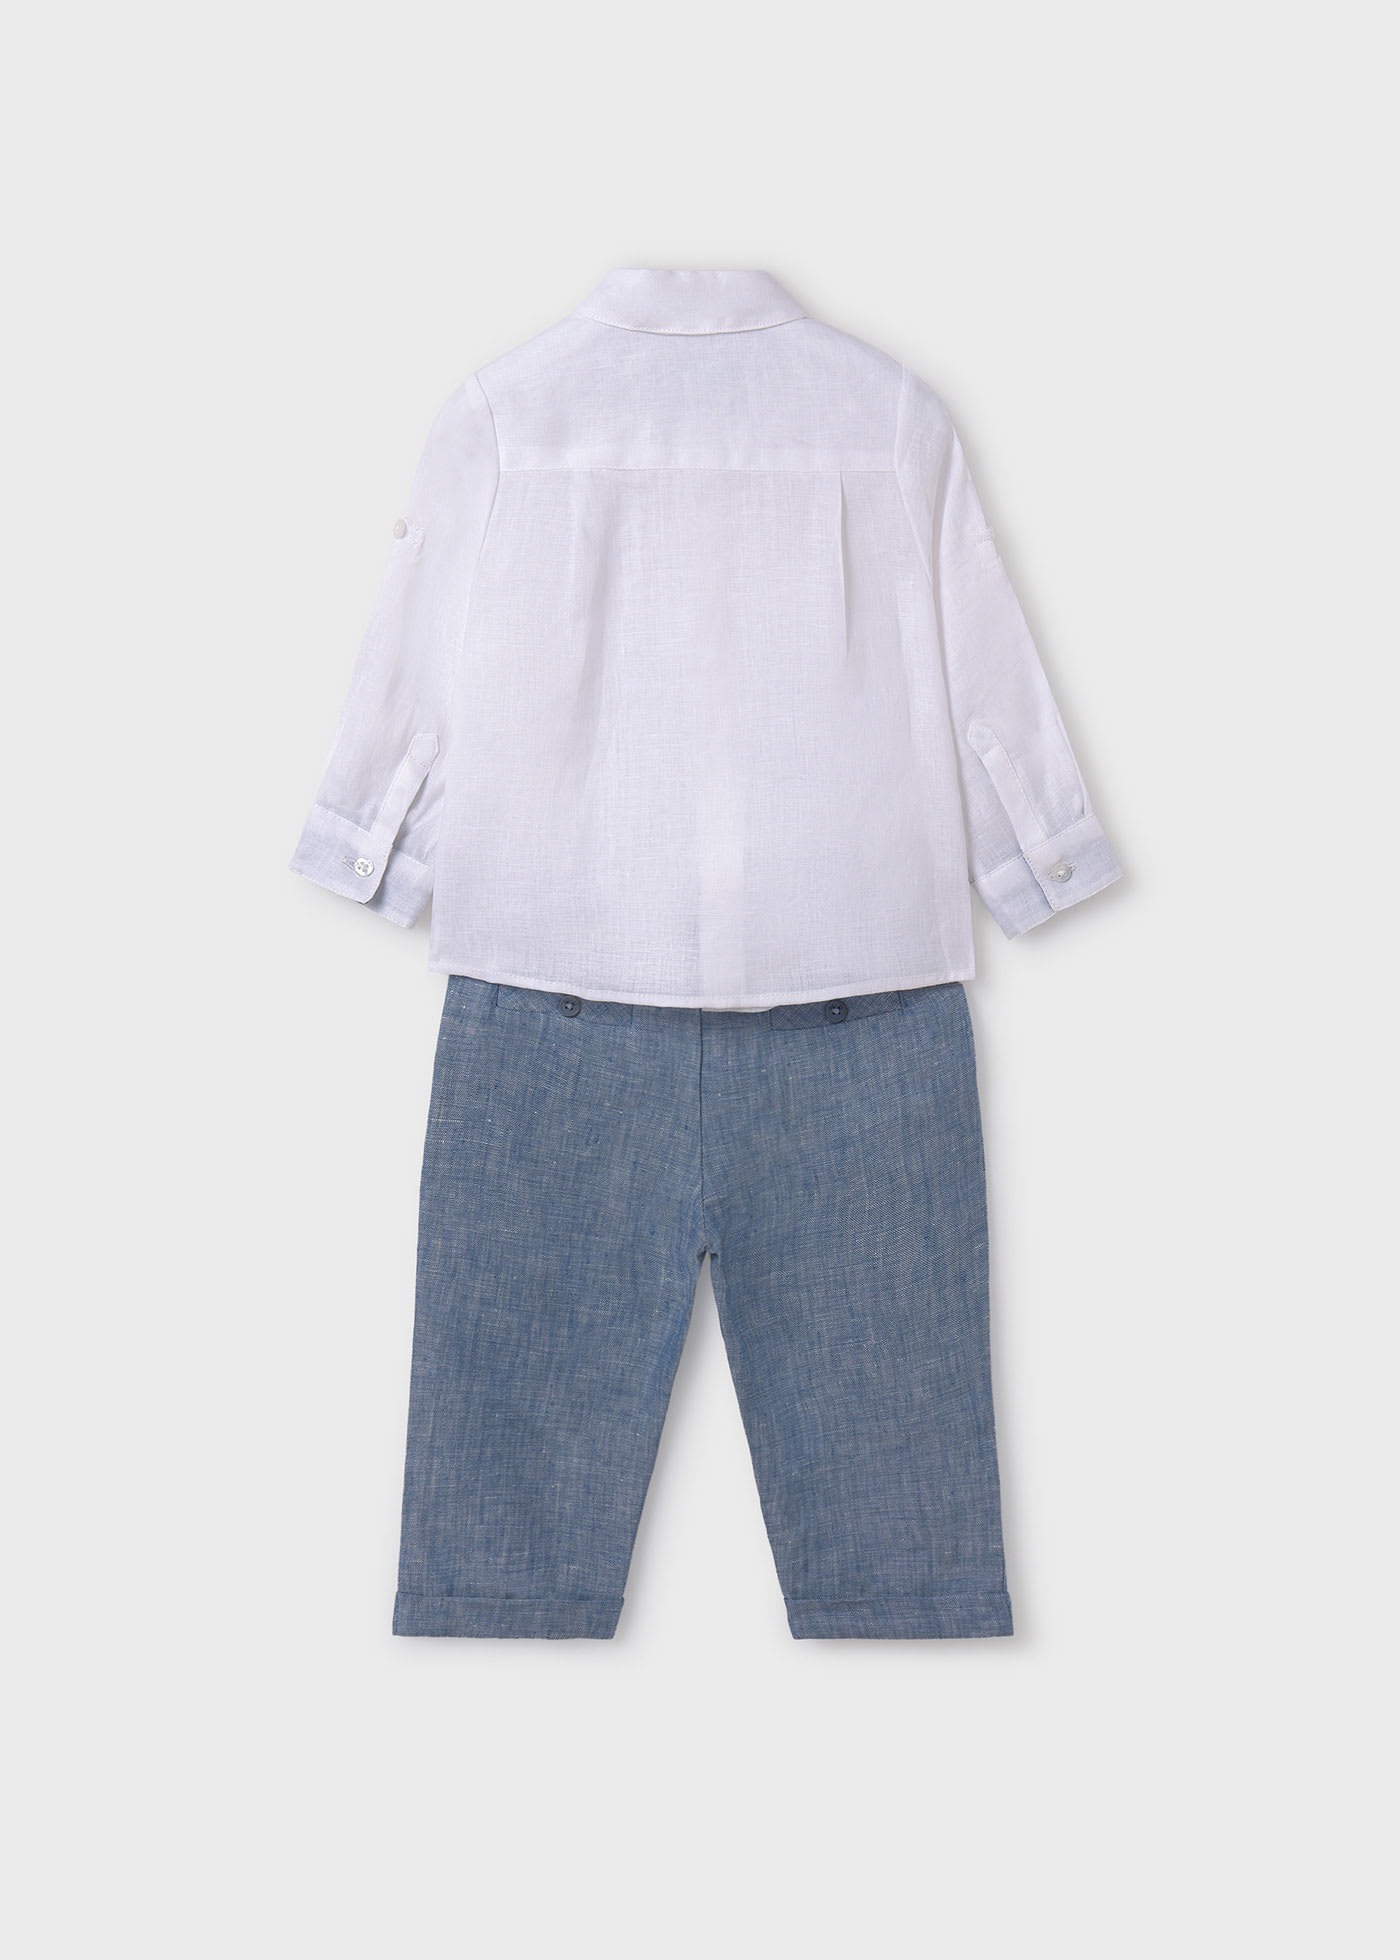 Baby set of pants and shirt